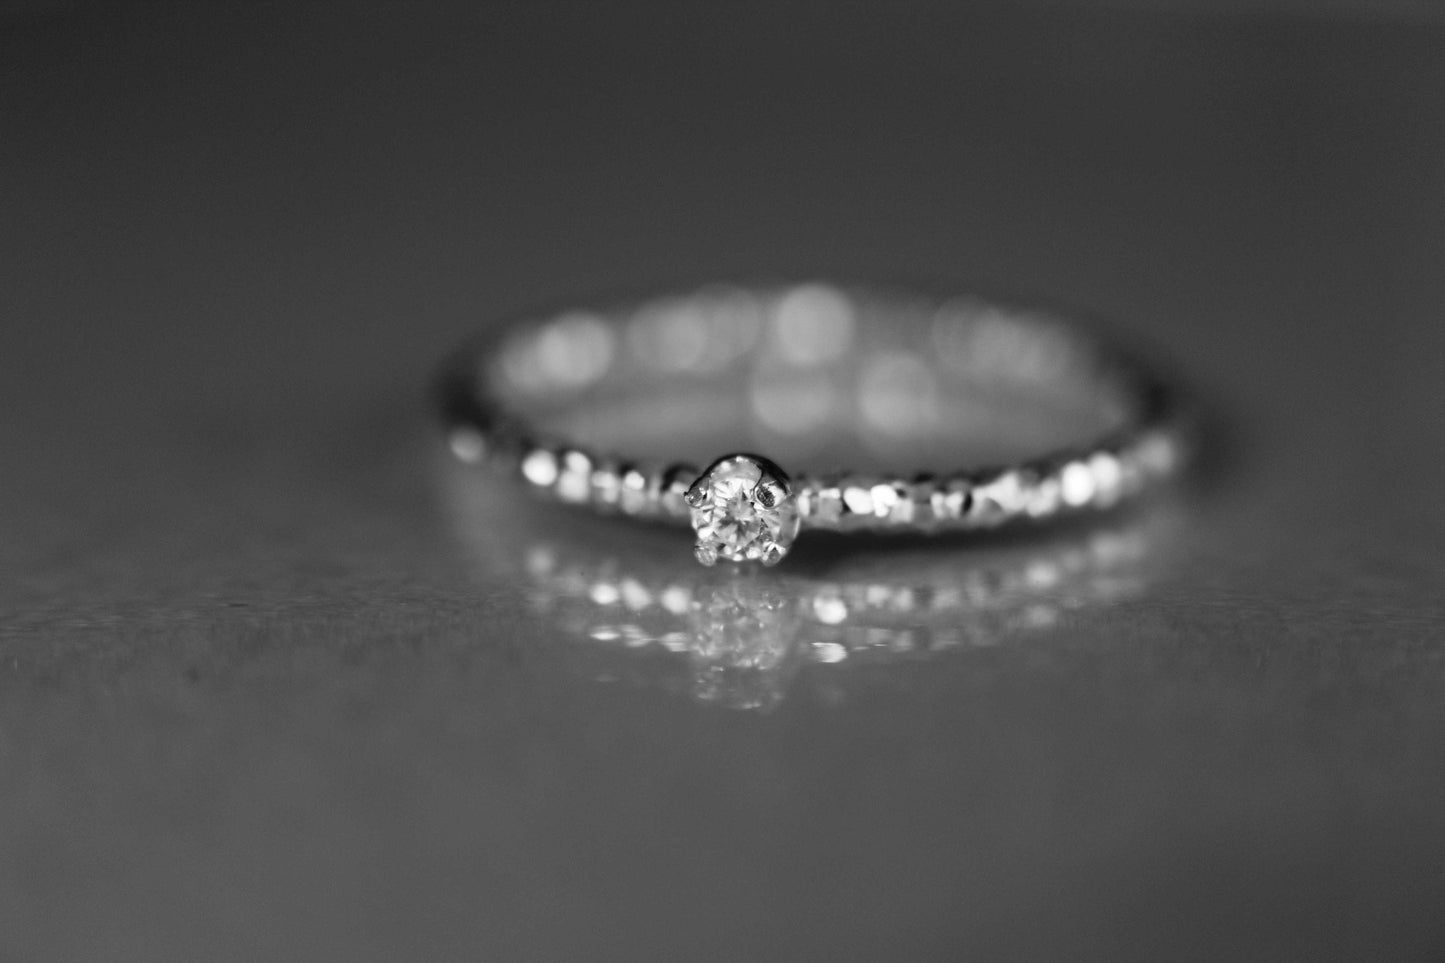 Diamond Ring, Genuine Diamond Ring, White Diamond, Faceted Ring, Minimalist Ring, Gift, Gemstone Ring, Tiny Diamond Ring, Diamond Ring, Gift